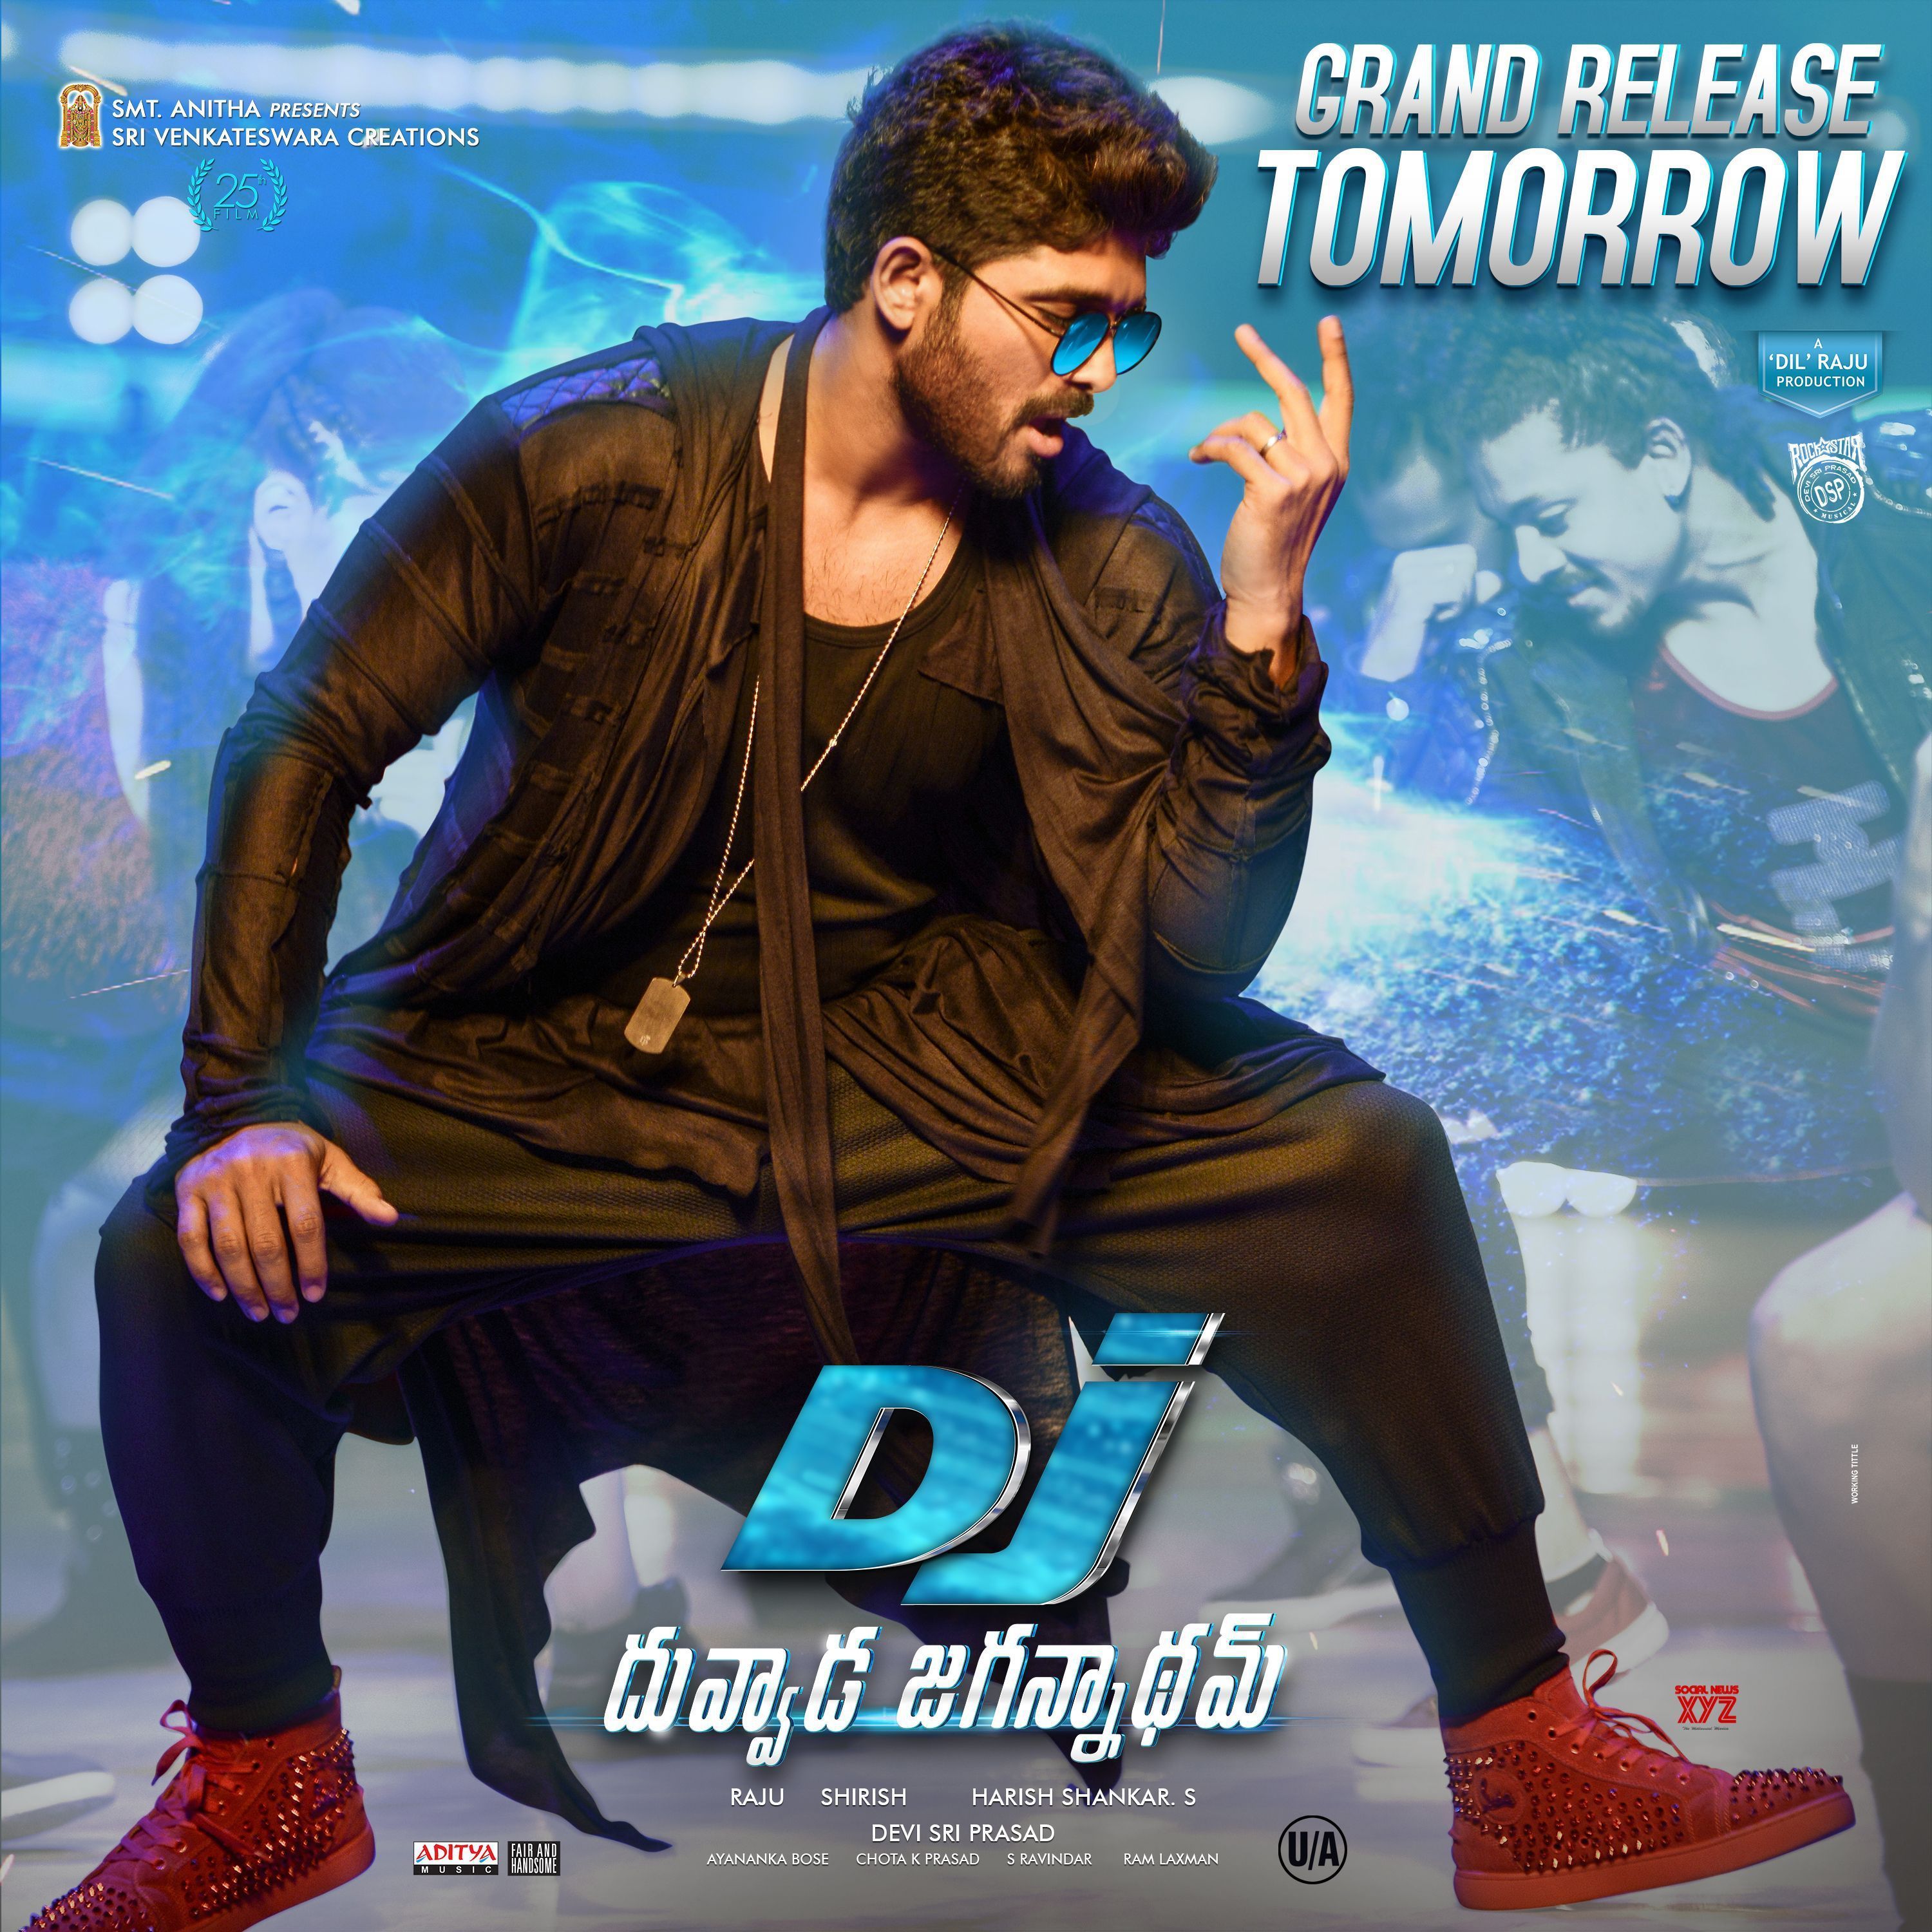 DJ Duvvada Jagannadham Releasing Tomorrow Wallpaper. Dj movie